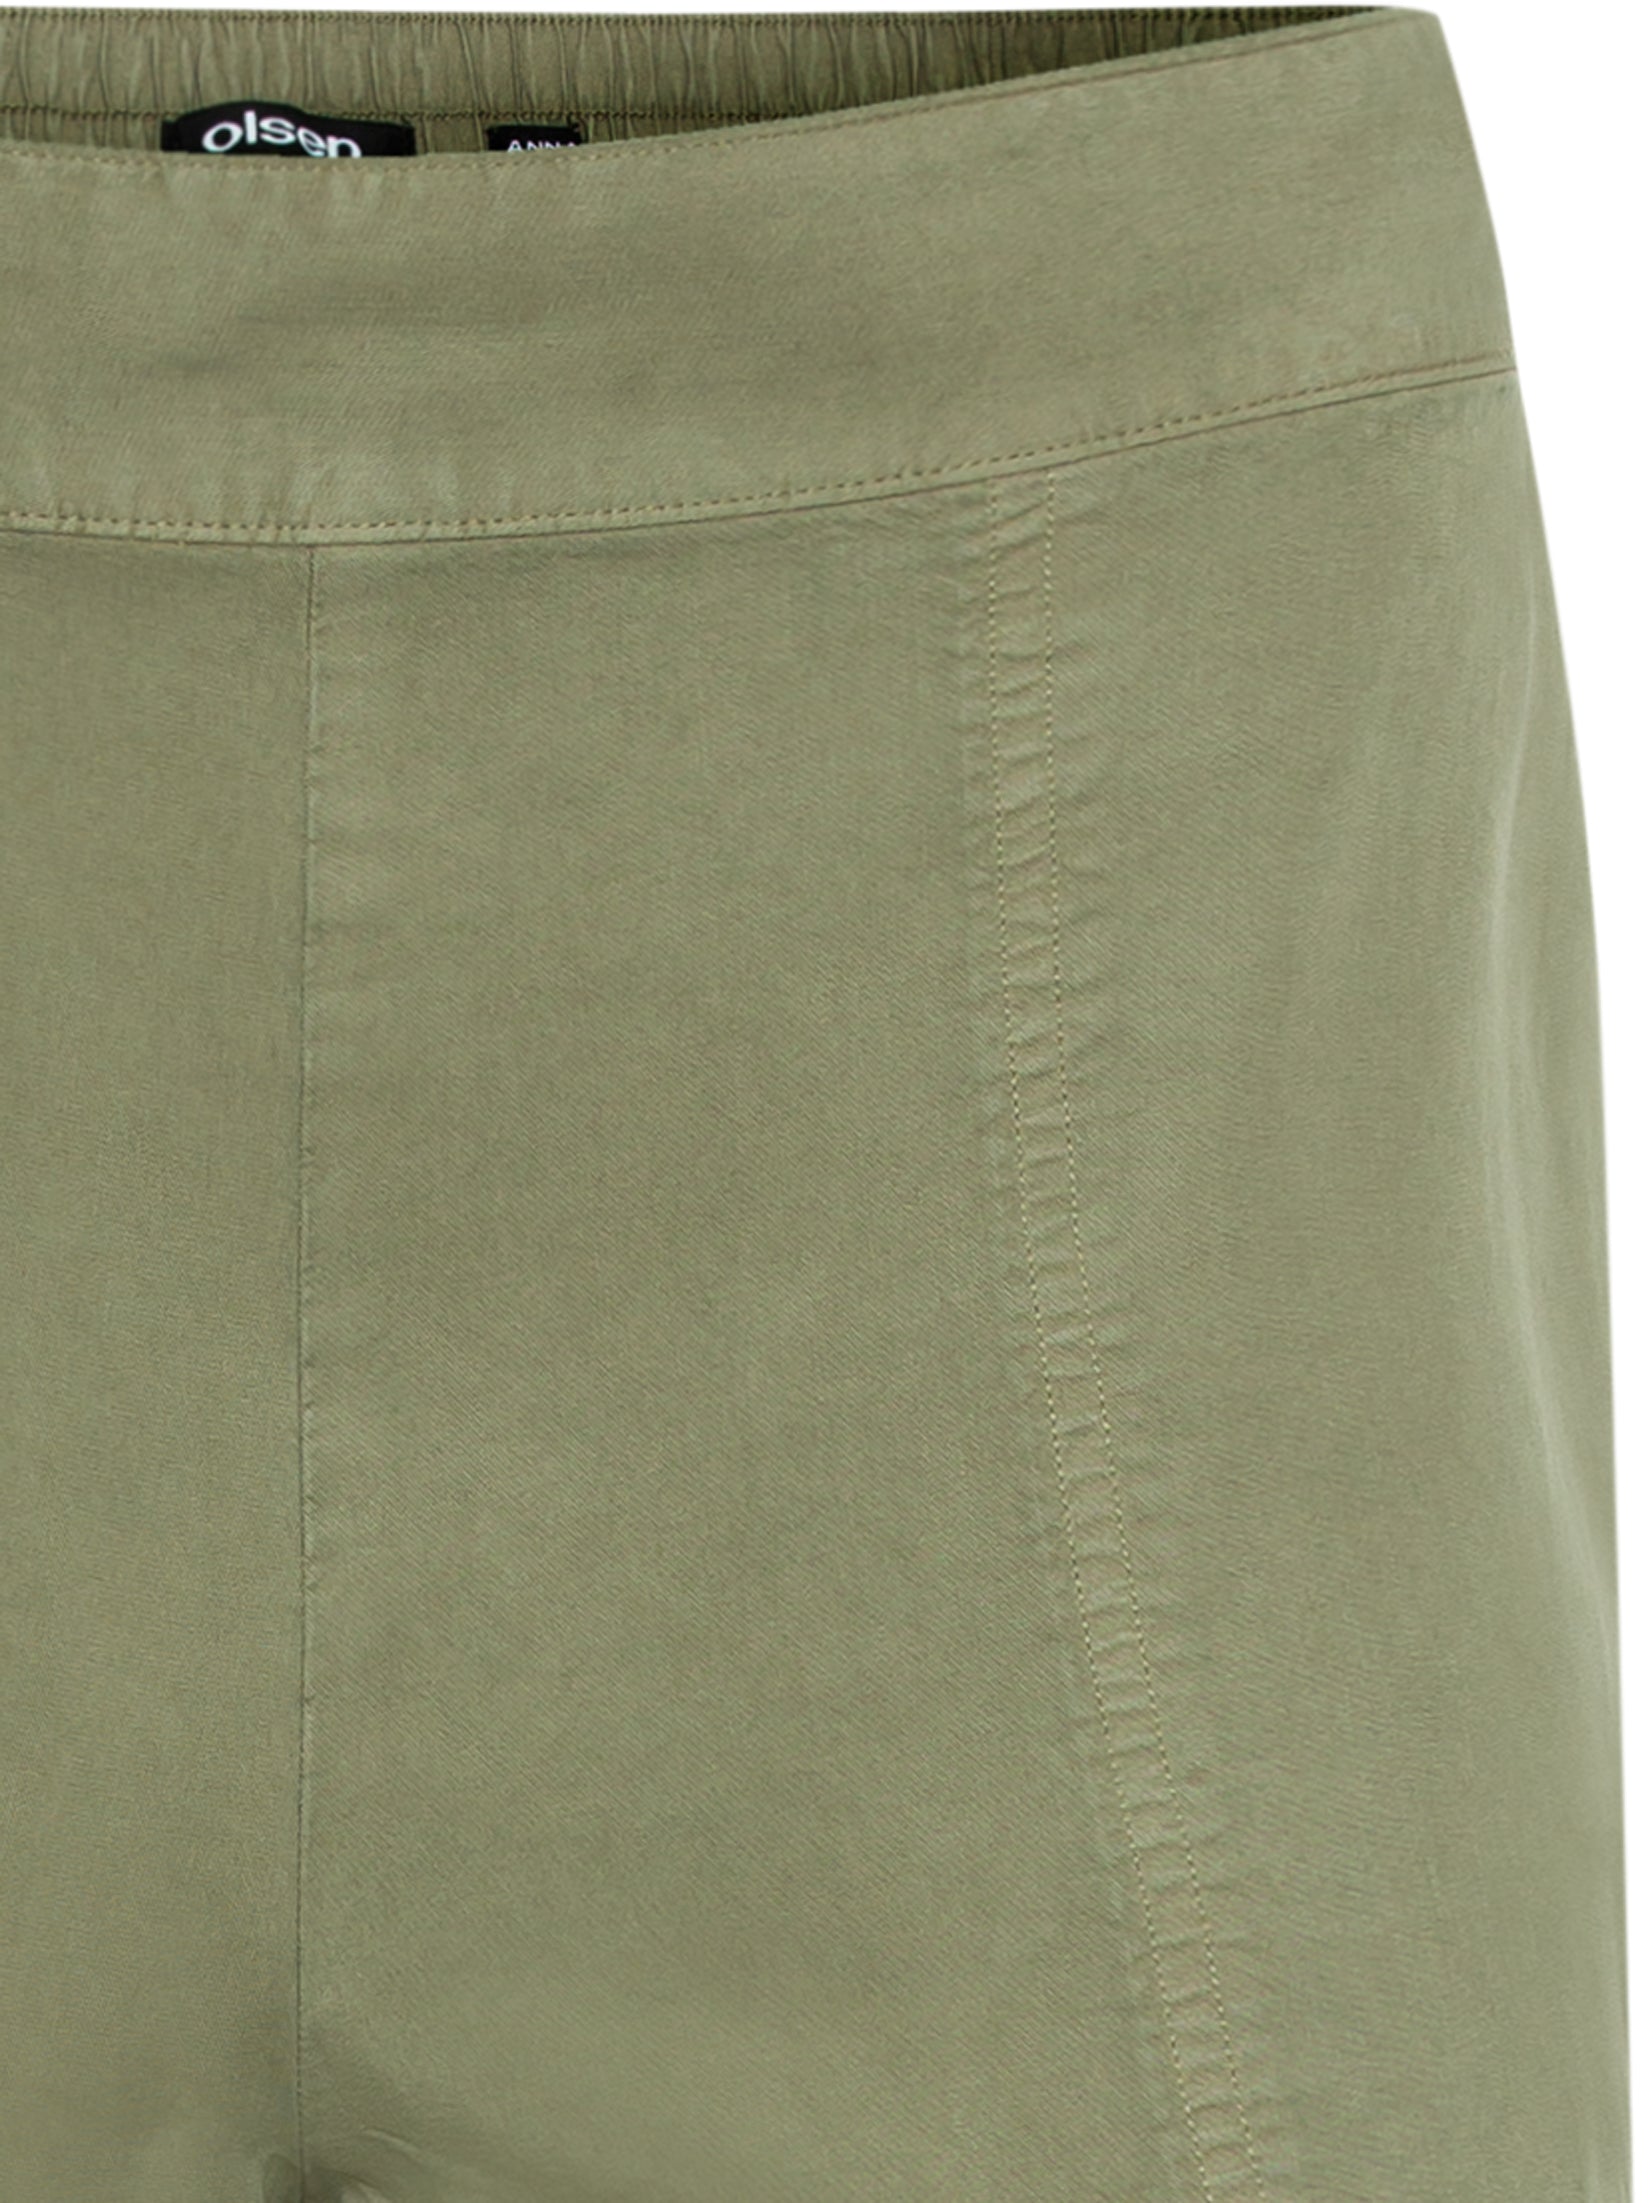 Khaki Casual Trousers 14002163